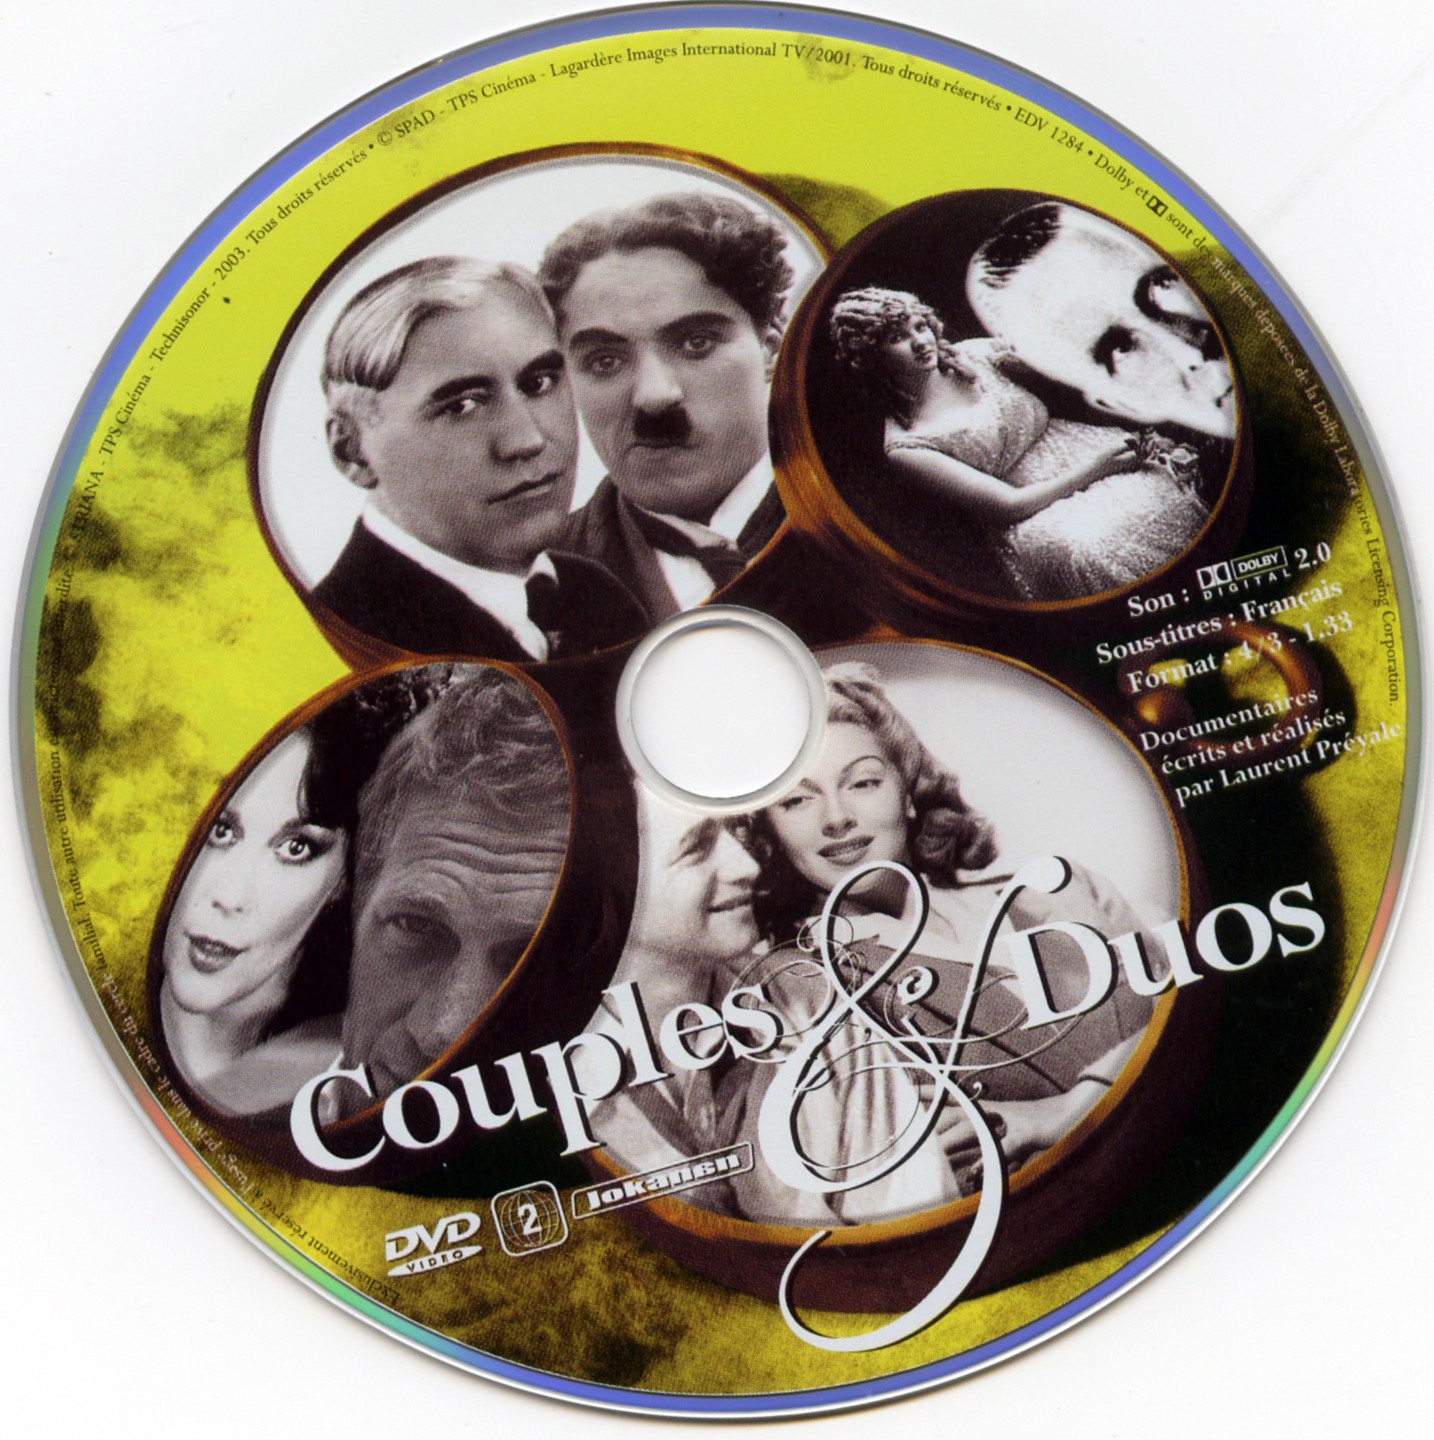 Couples et duos DVD 02